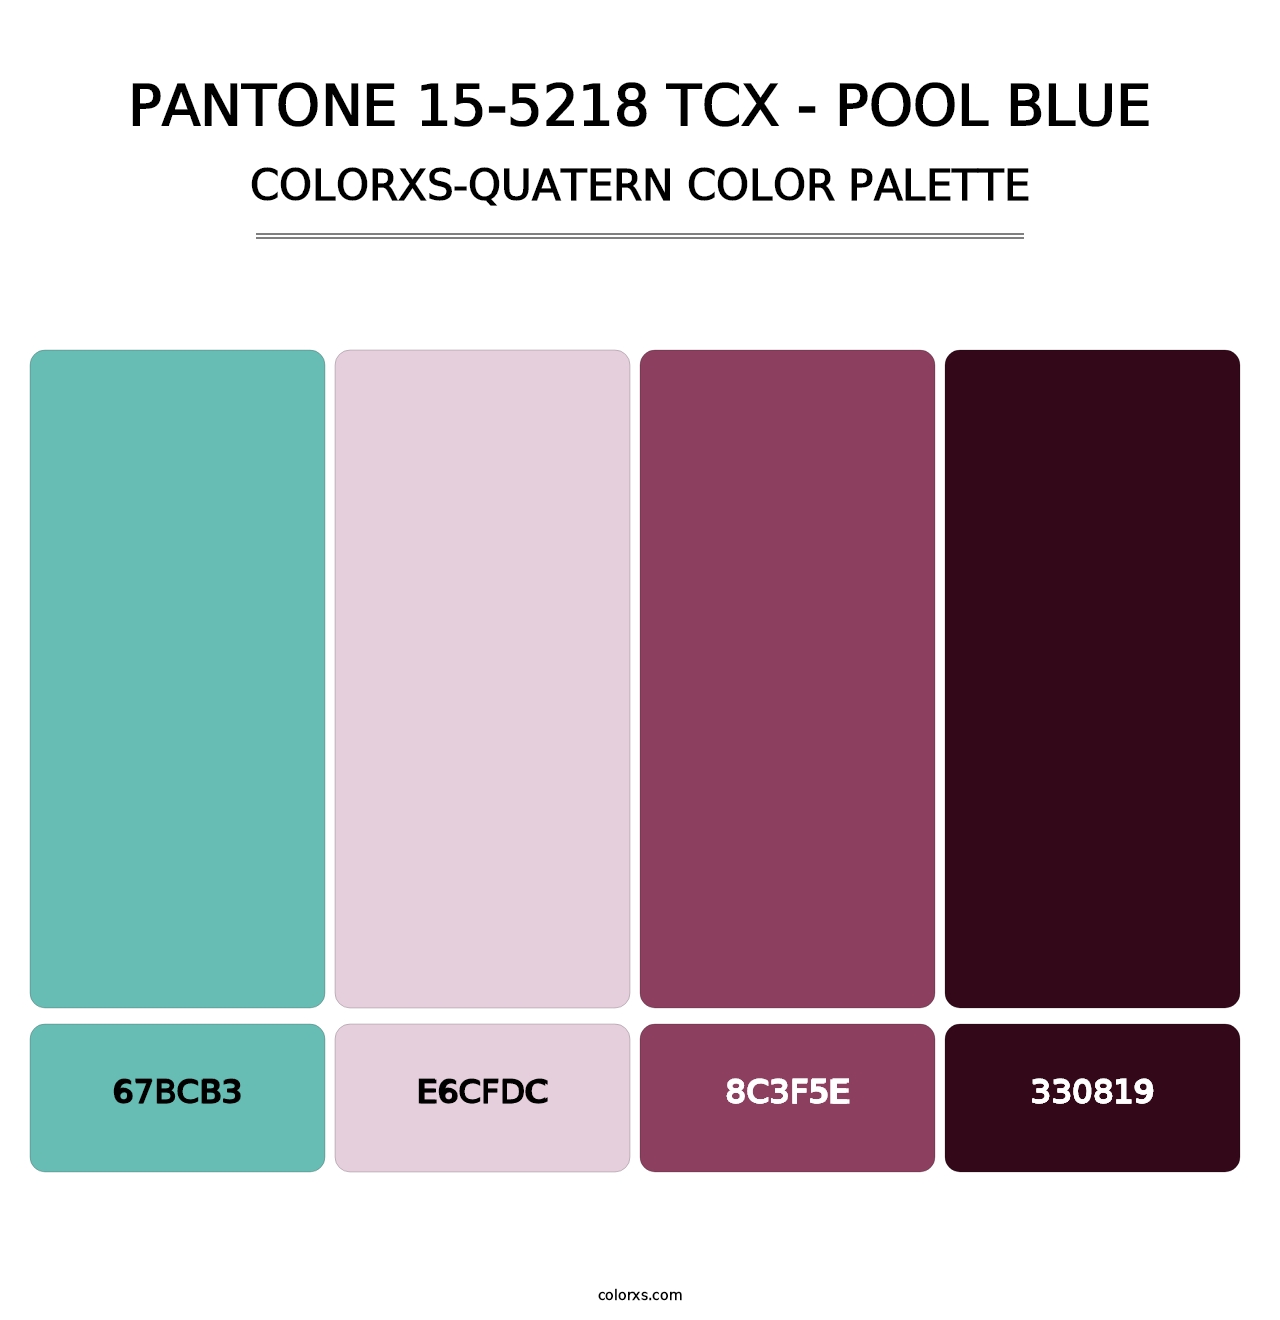 PANTONE 15-5218 TCX - Pool Blue - Colorxs Quatern Palette